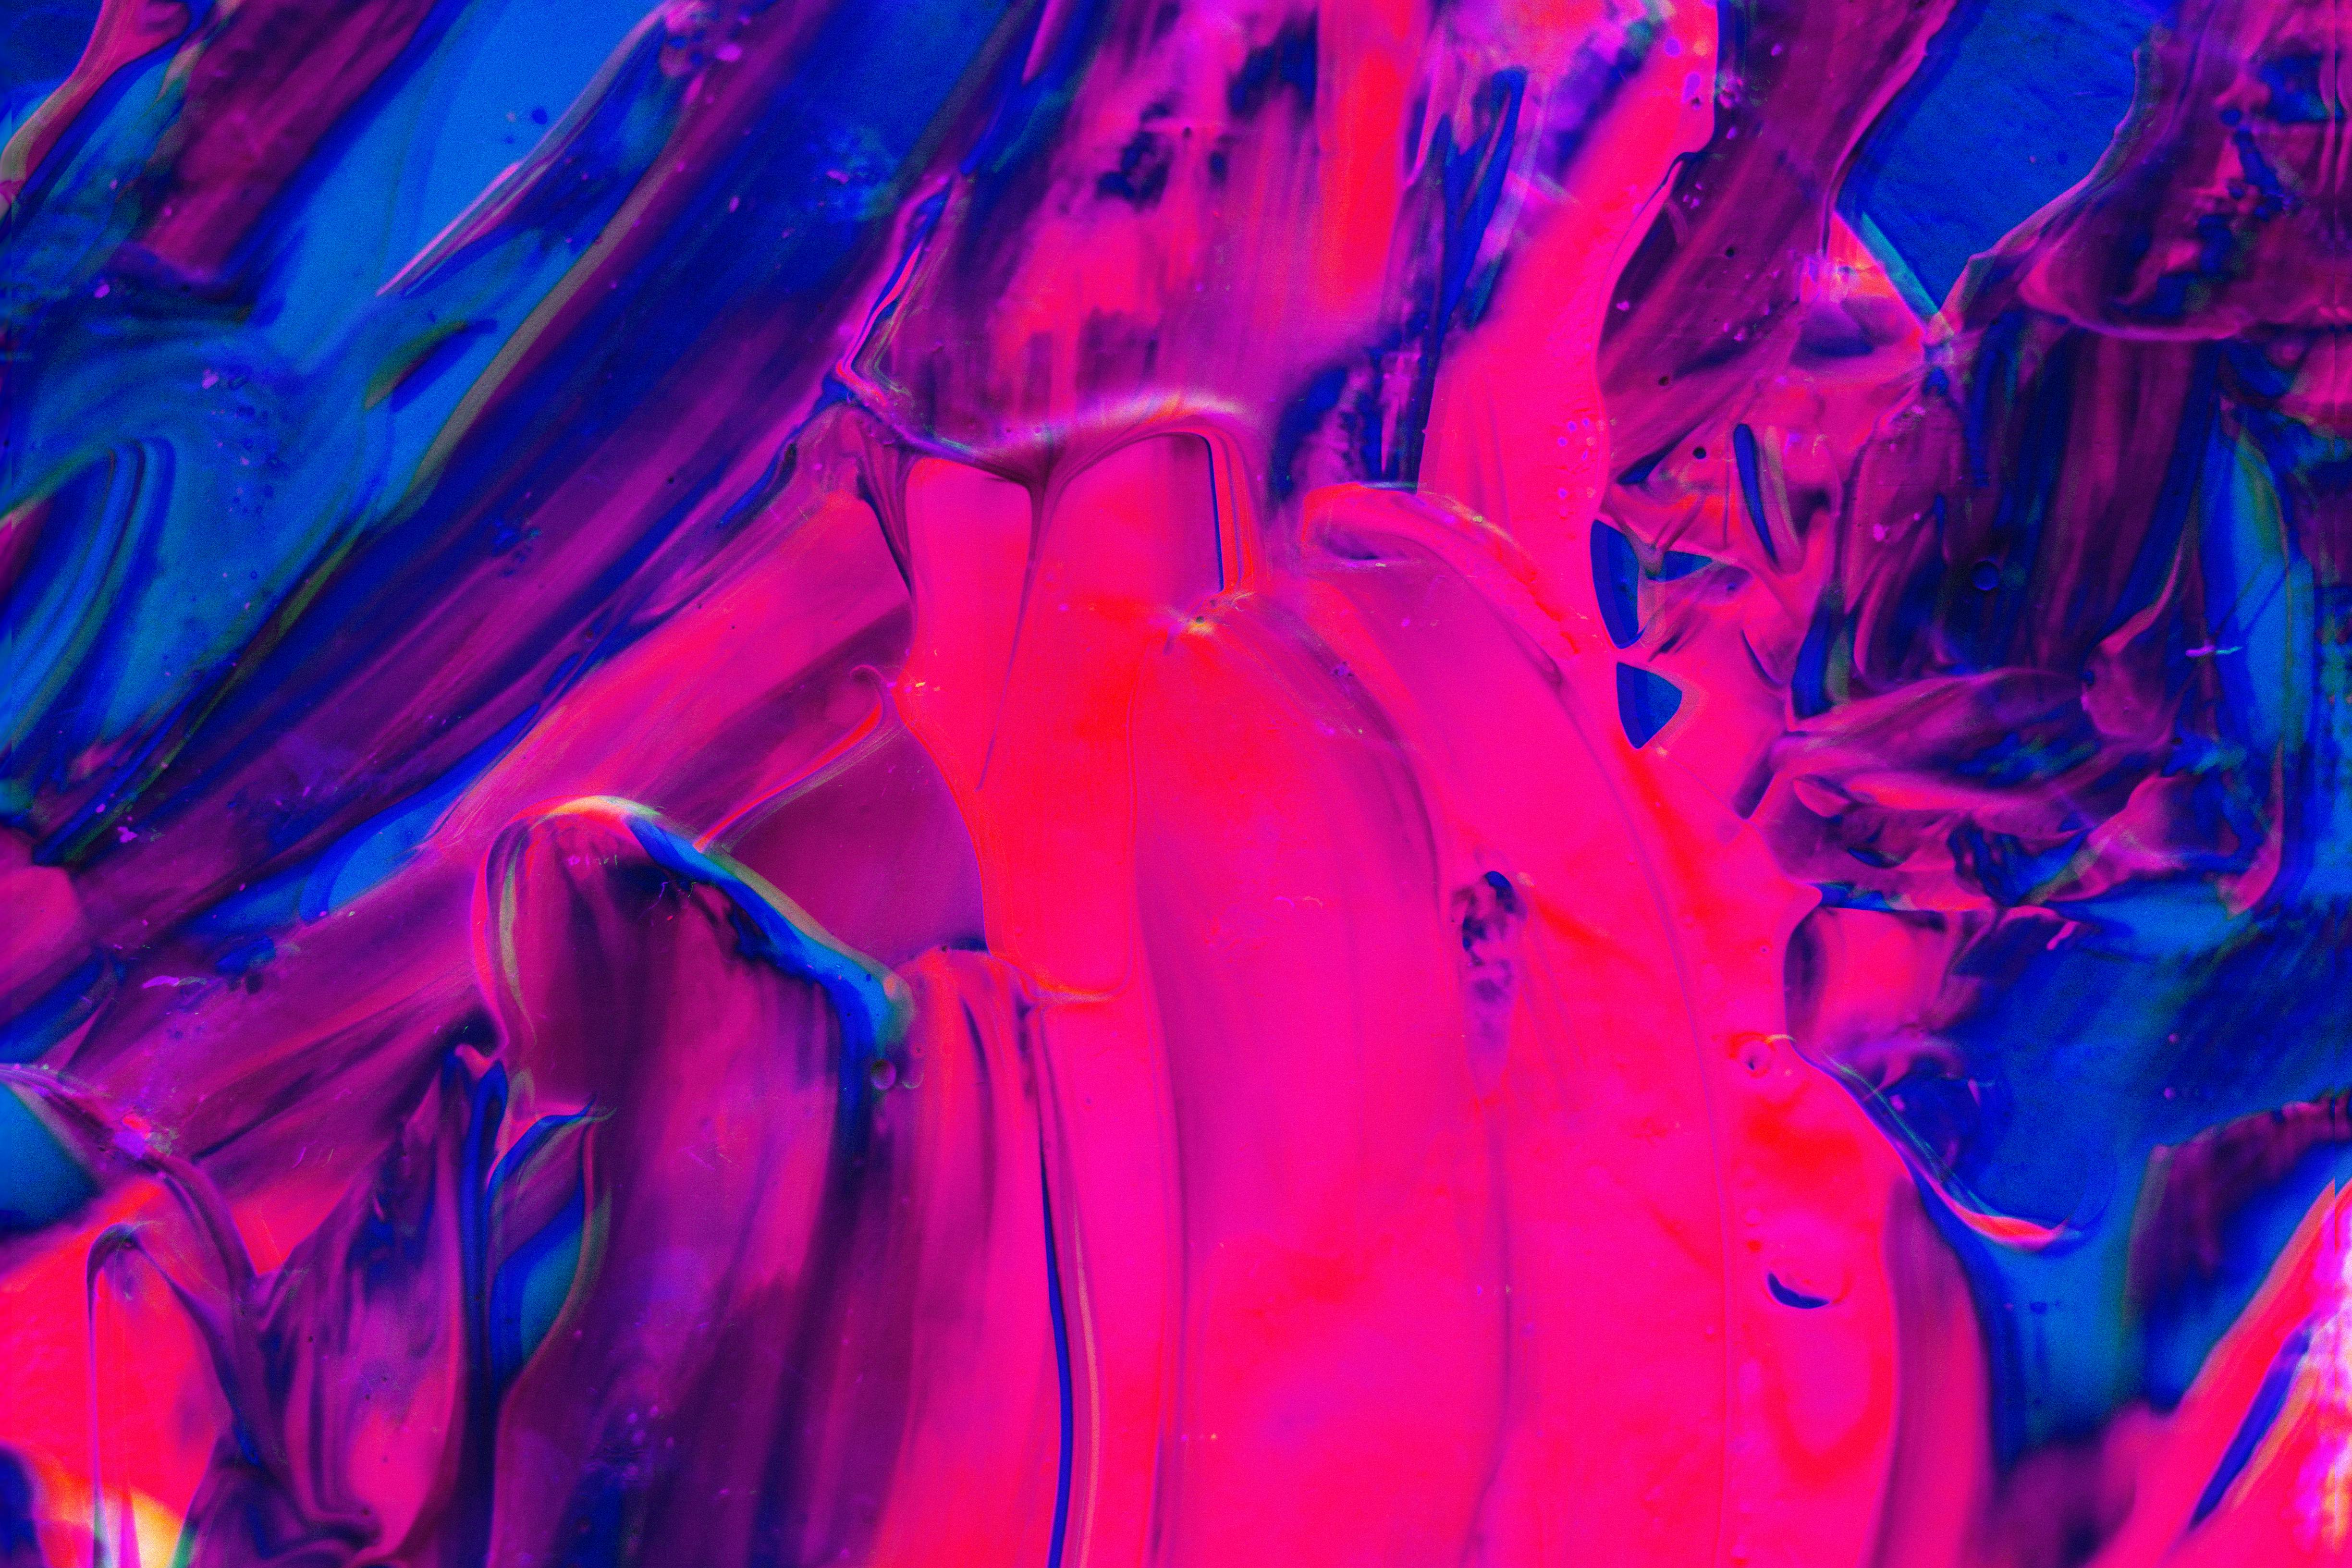 Wallpaper  digital art abstract space red purple magenta darkness  graphics 1920x1080 px computer wallpaper 1920x1080  wallup  776602  HD  Wallpapers  WallHere